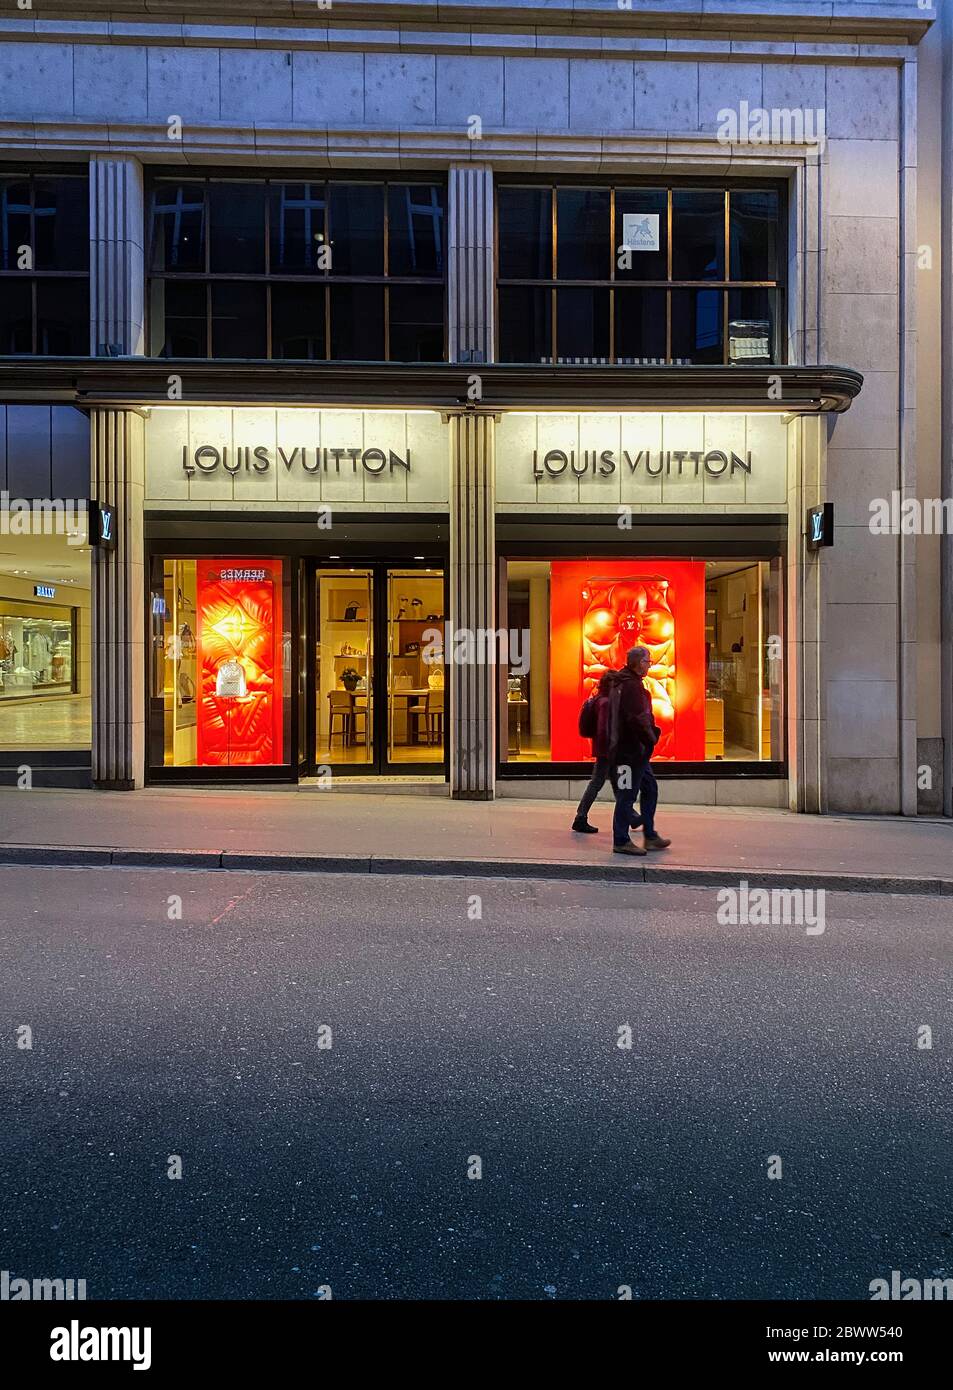 Die Louis Vuitton Shop Front, Basel, Schweiz Stockfotografie - Alamy